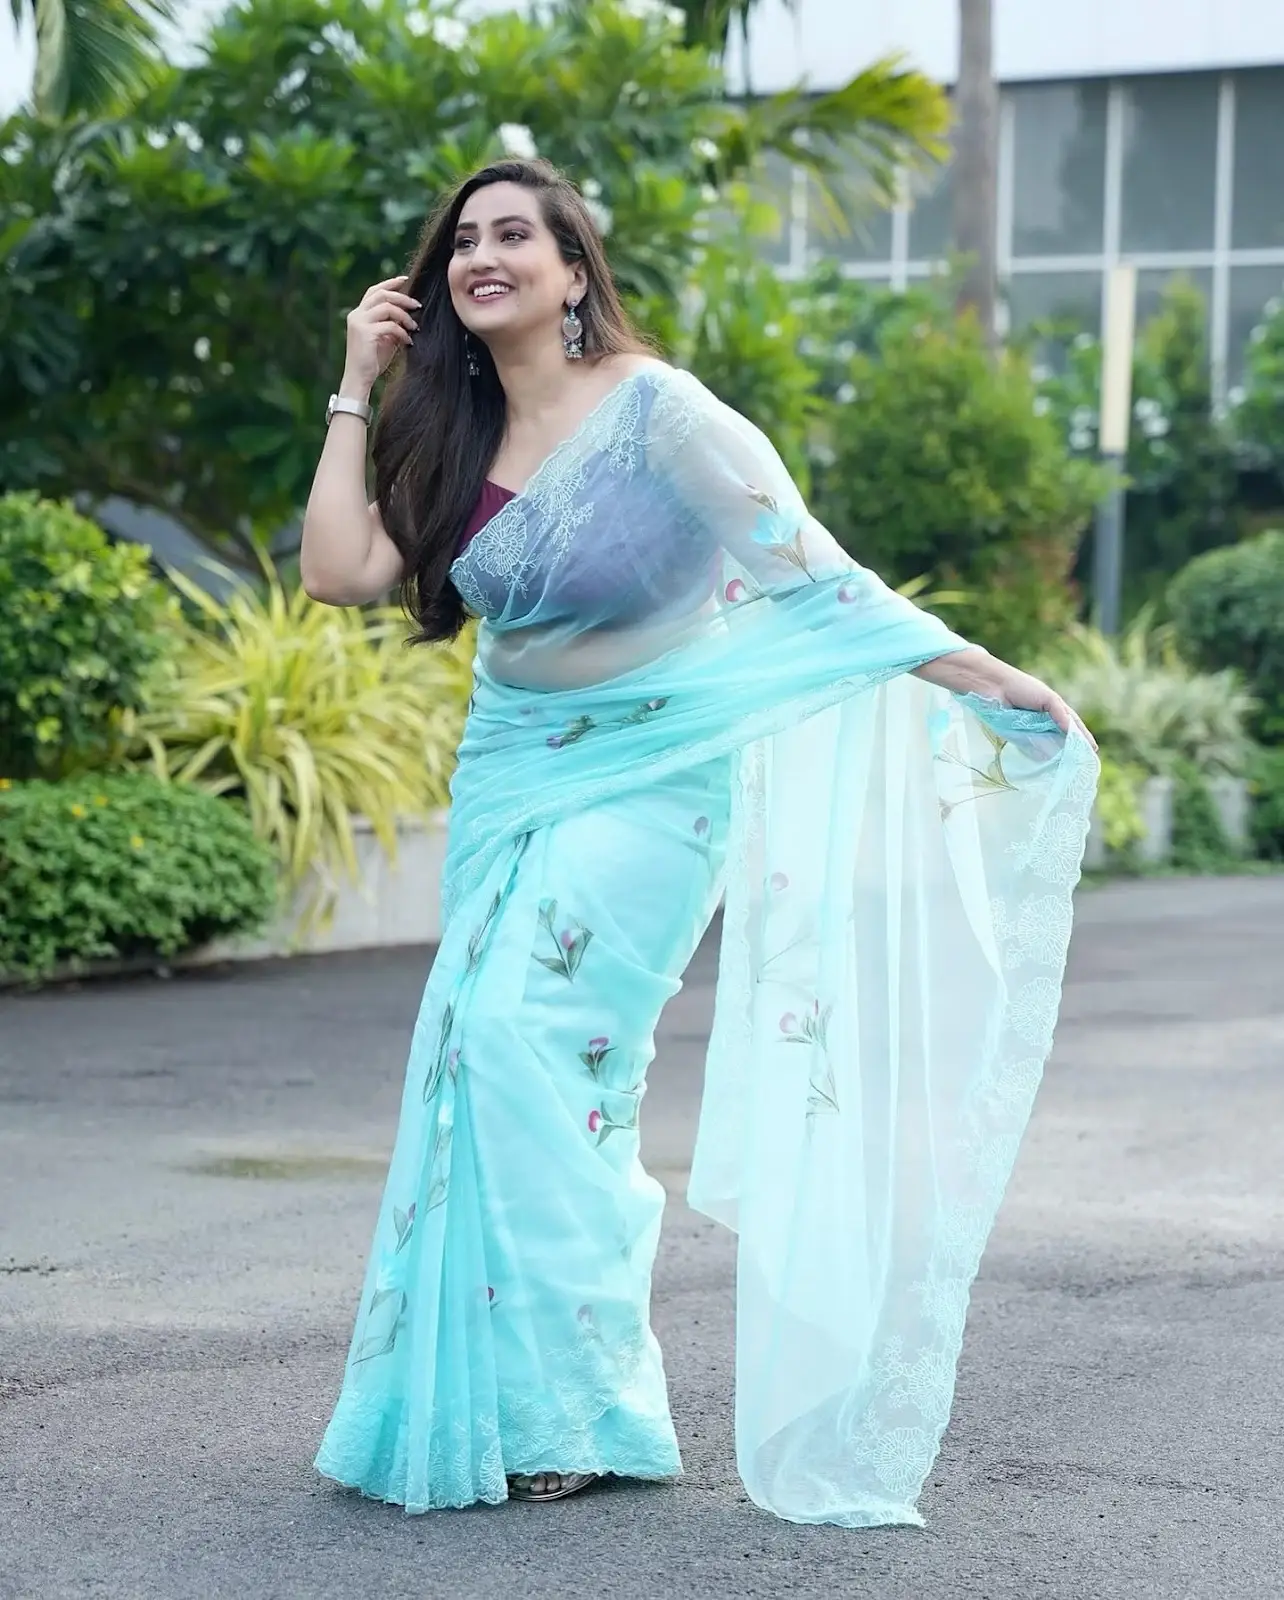 INDIAS MOST BEAUTIFUL GIRL MANJUSHA RAMPALLI IN BLUE SAREE 2